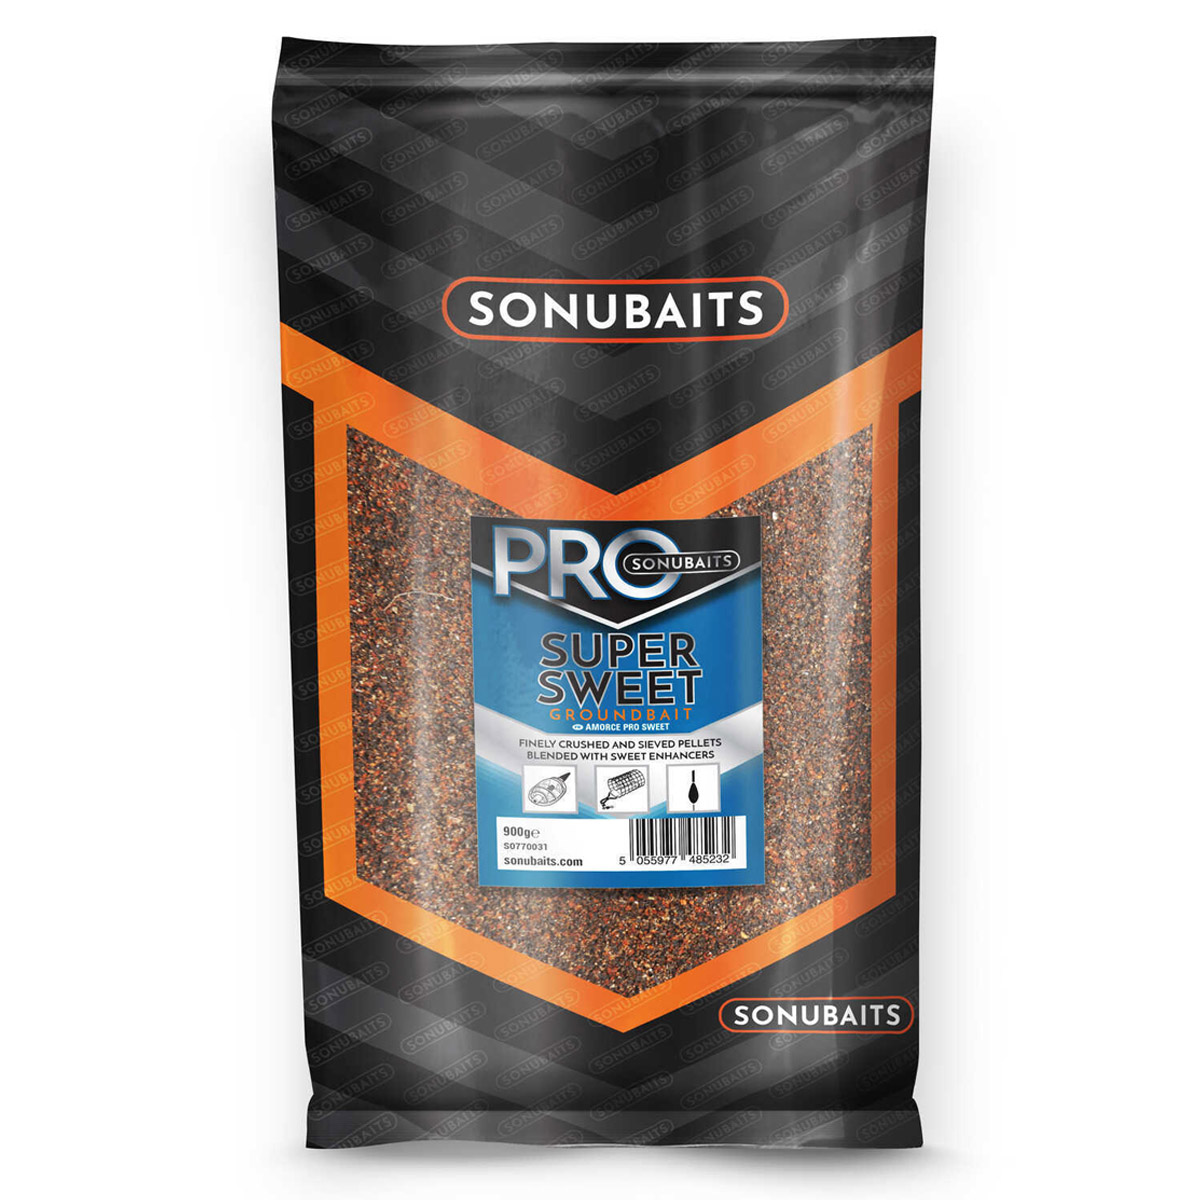 Sonubaits Pro Super Sweet Groundbait 900 Gram